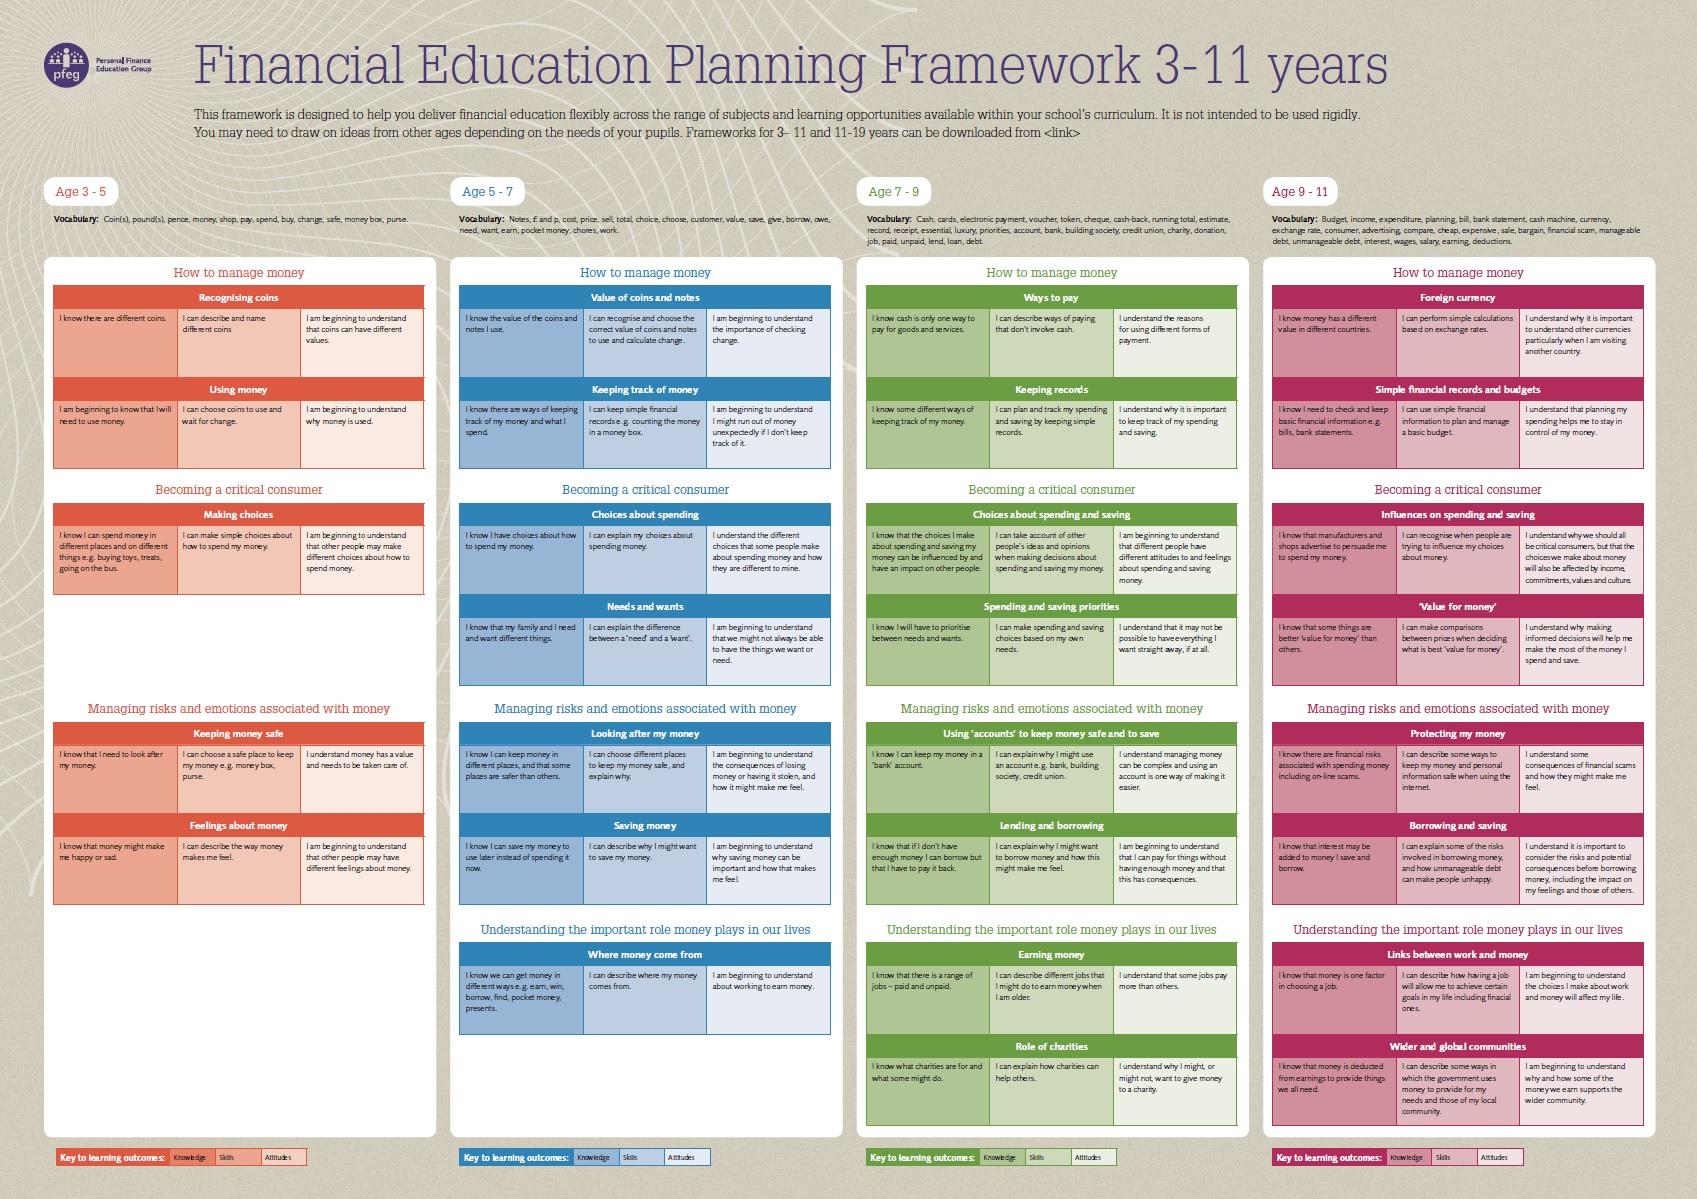 Planning framework in A2 poster form